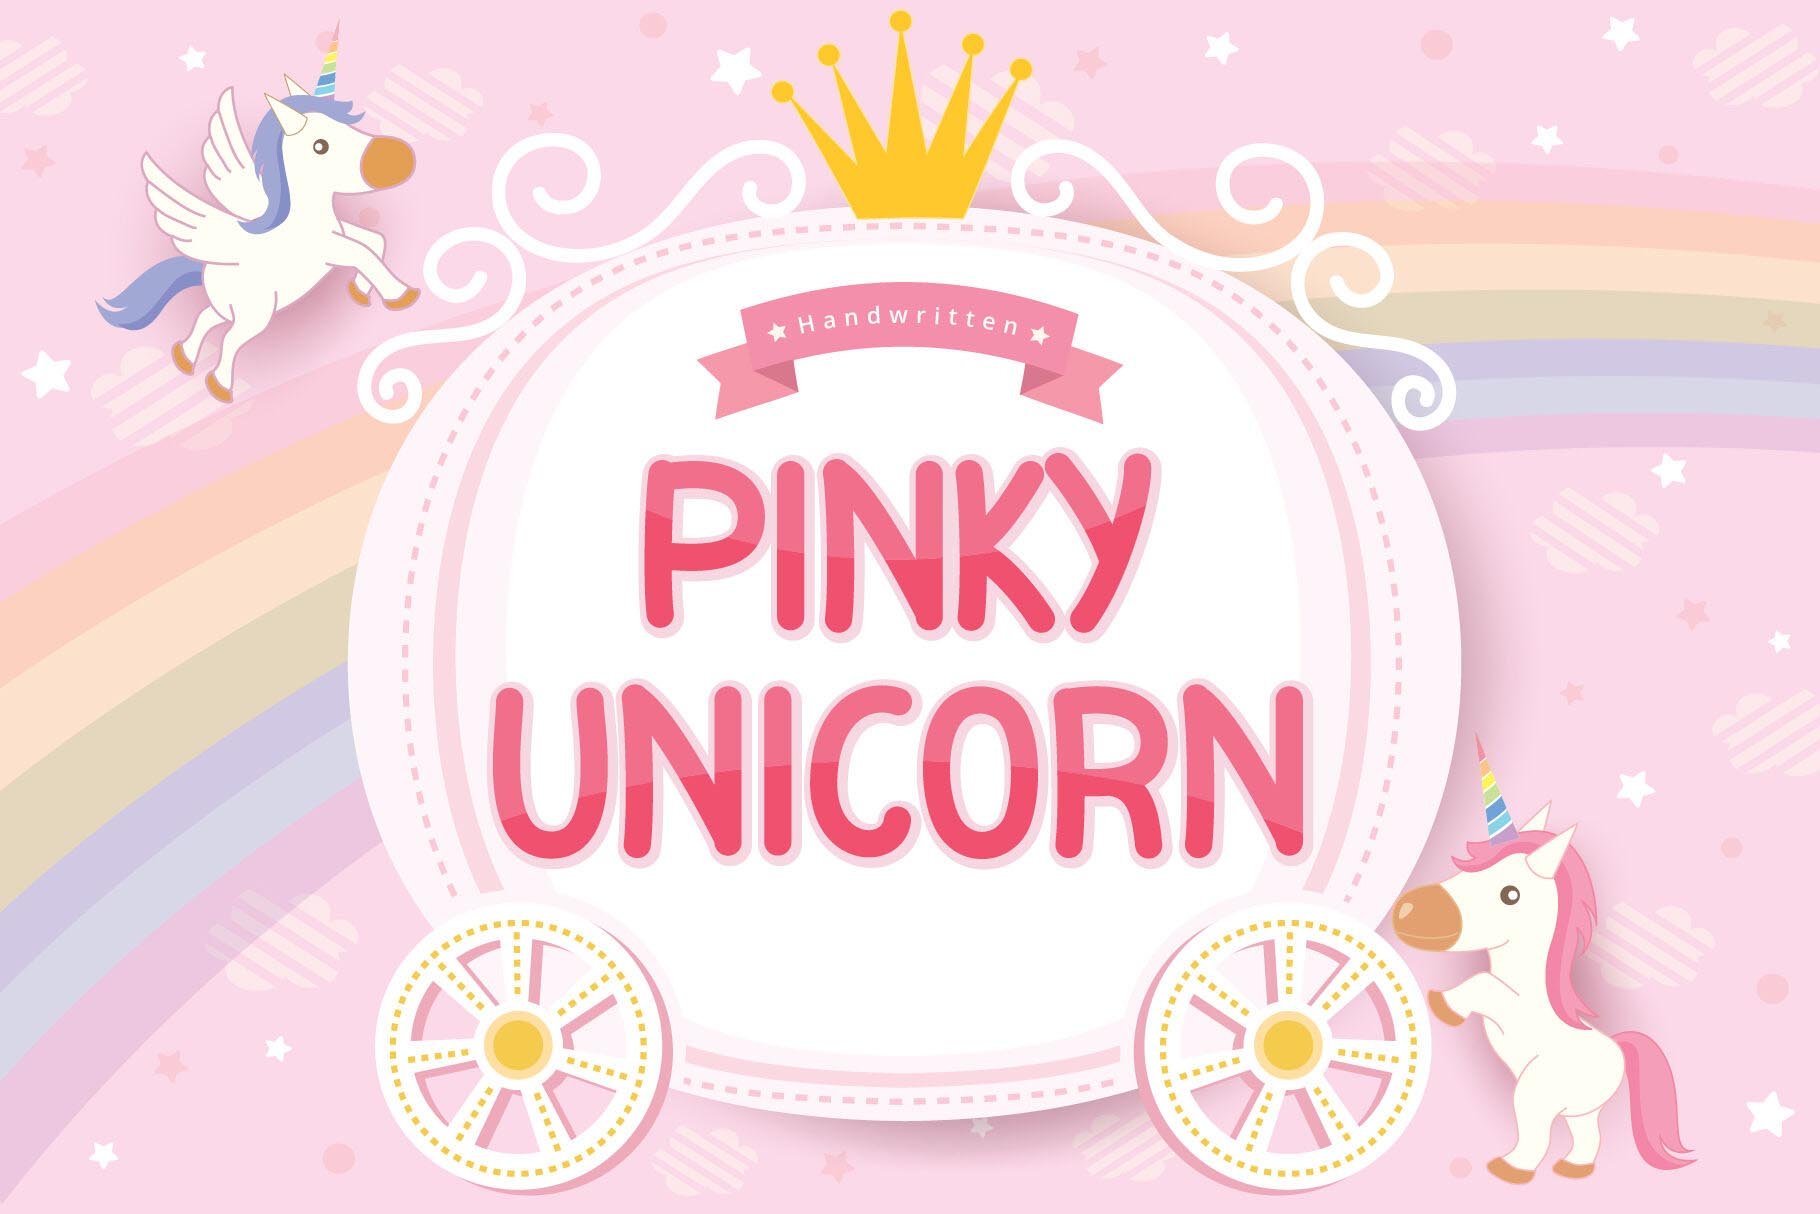 Pinky Unicorn - Display Font cover image.